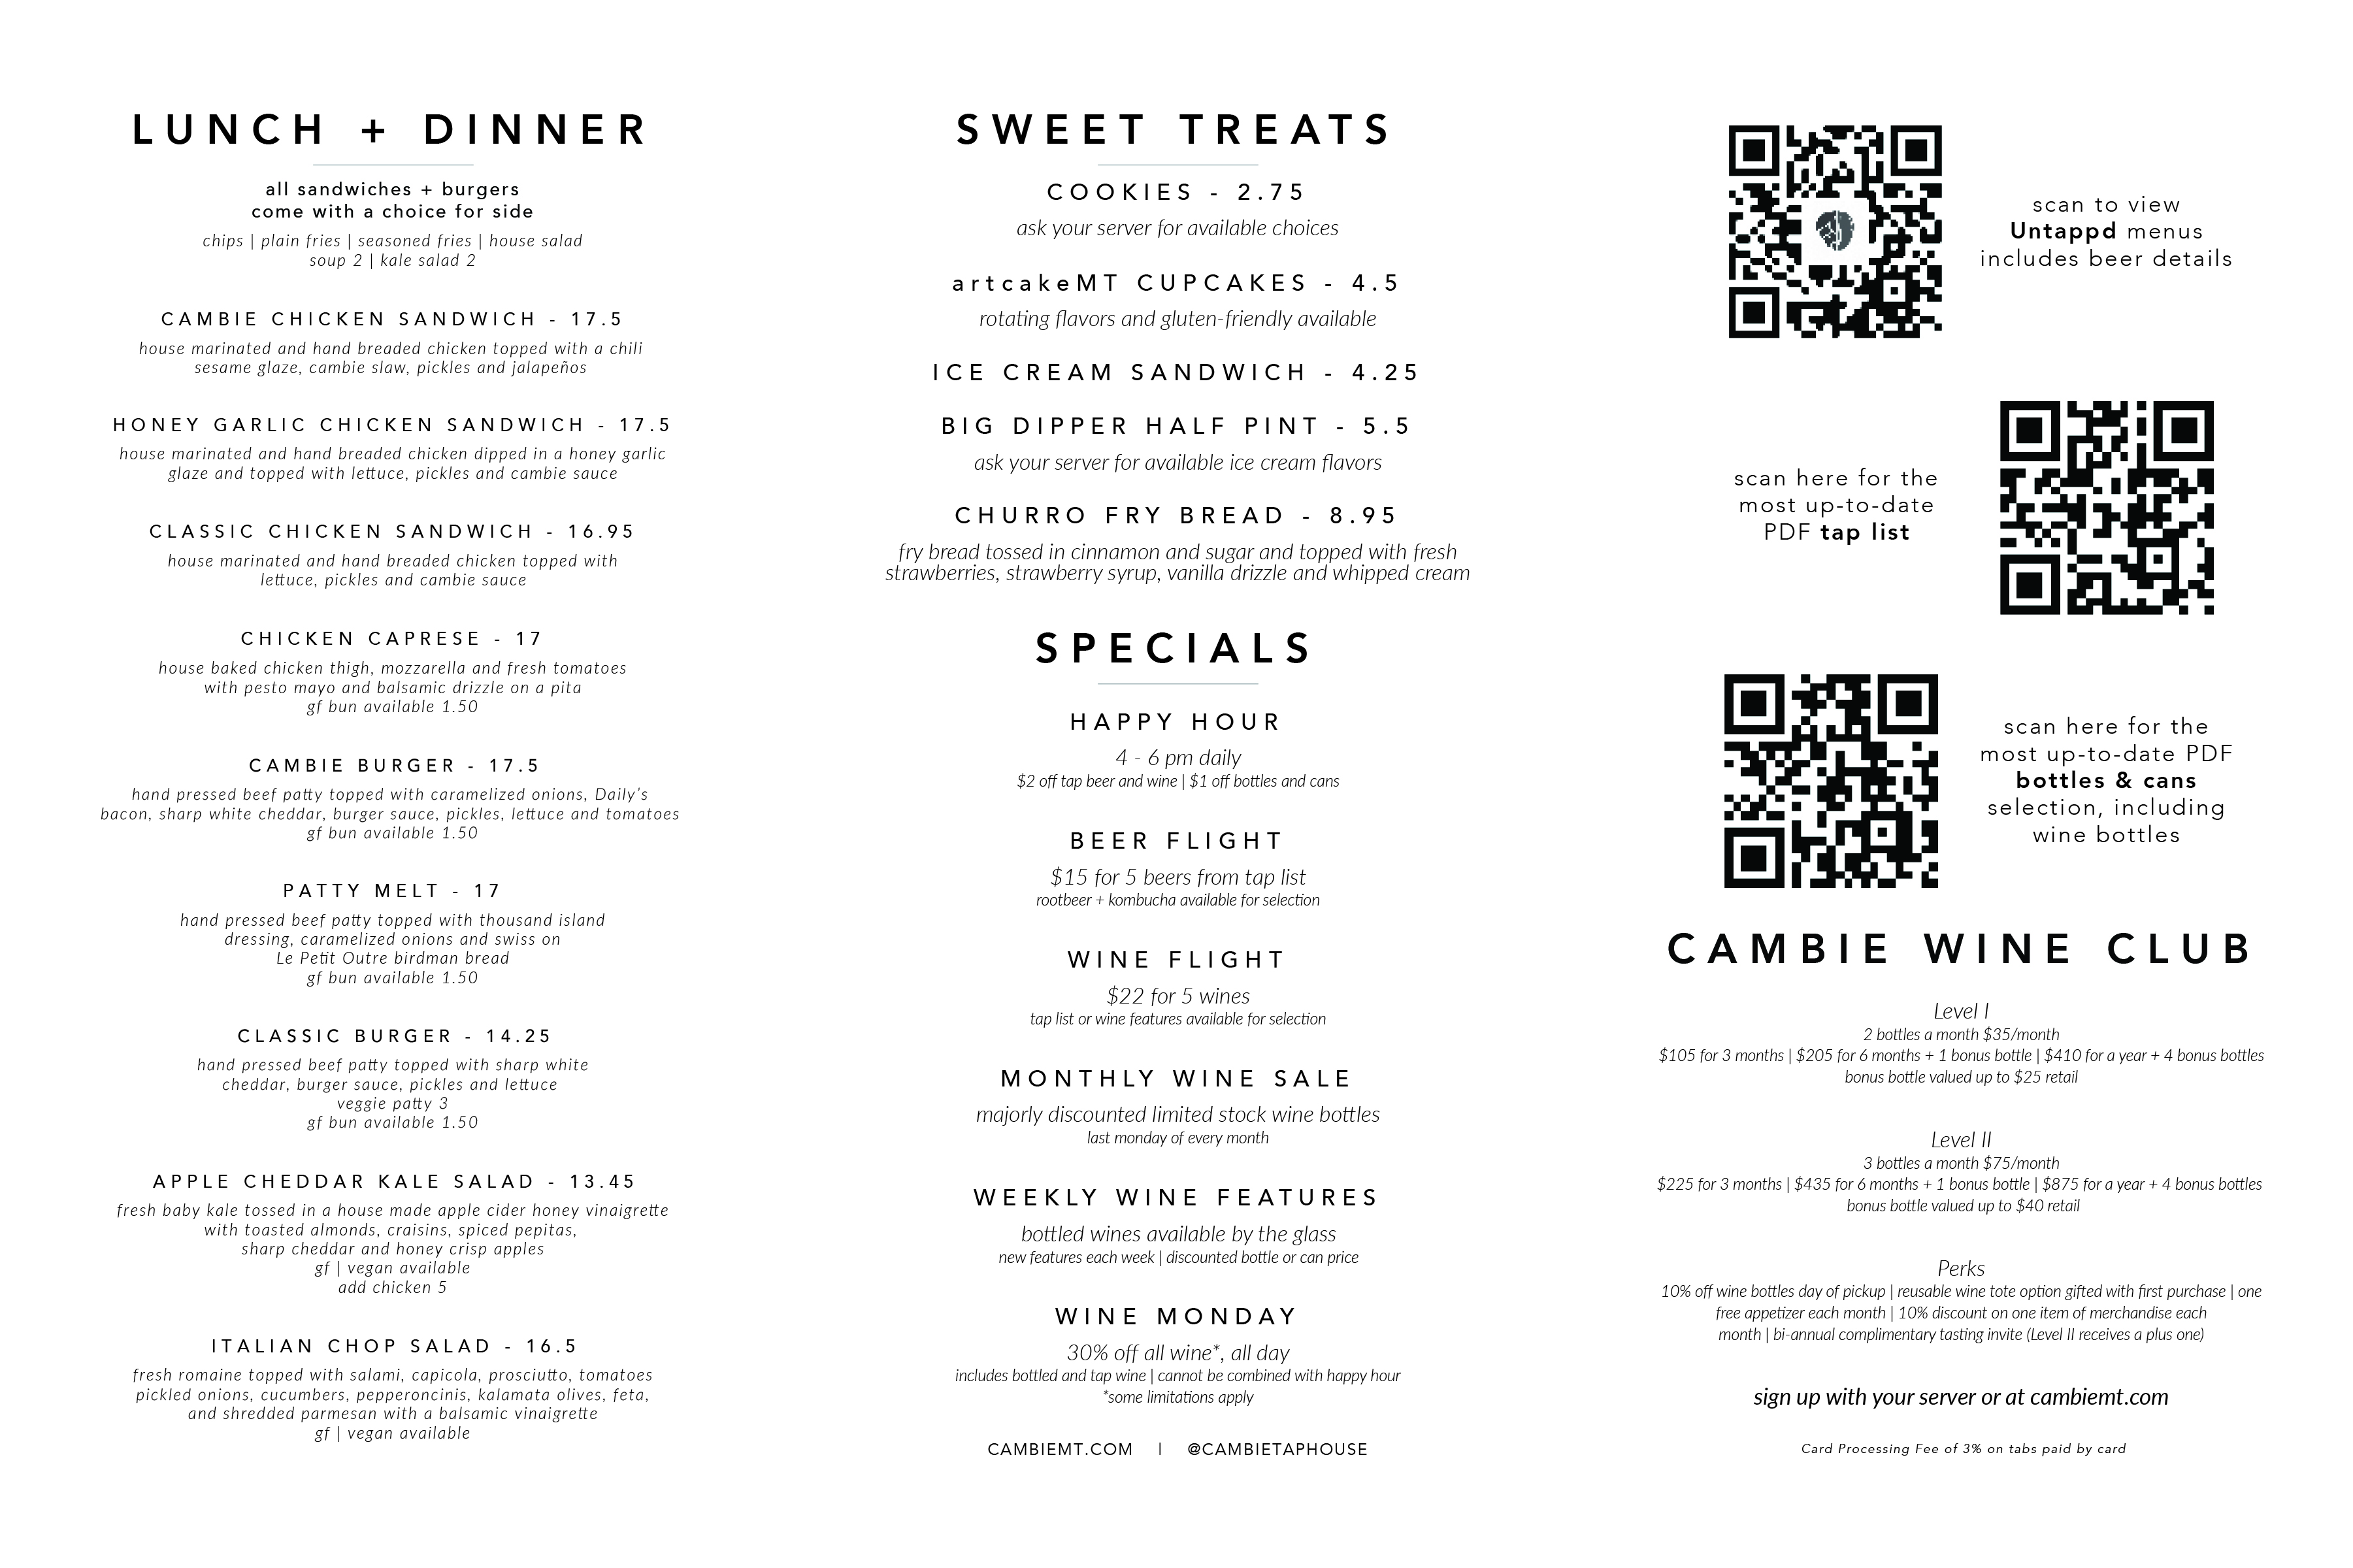 Cambie Taphouse + Coffee Food menu